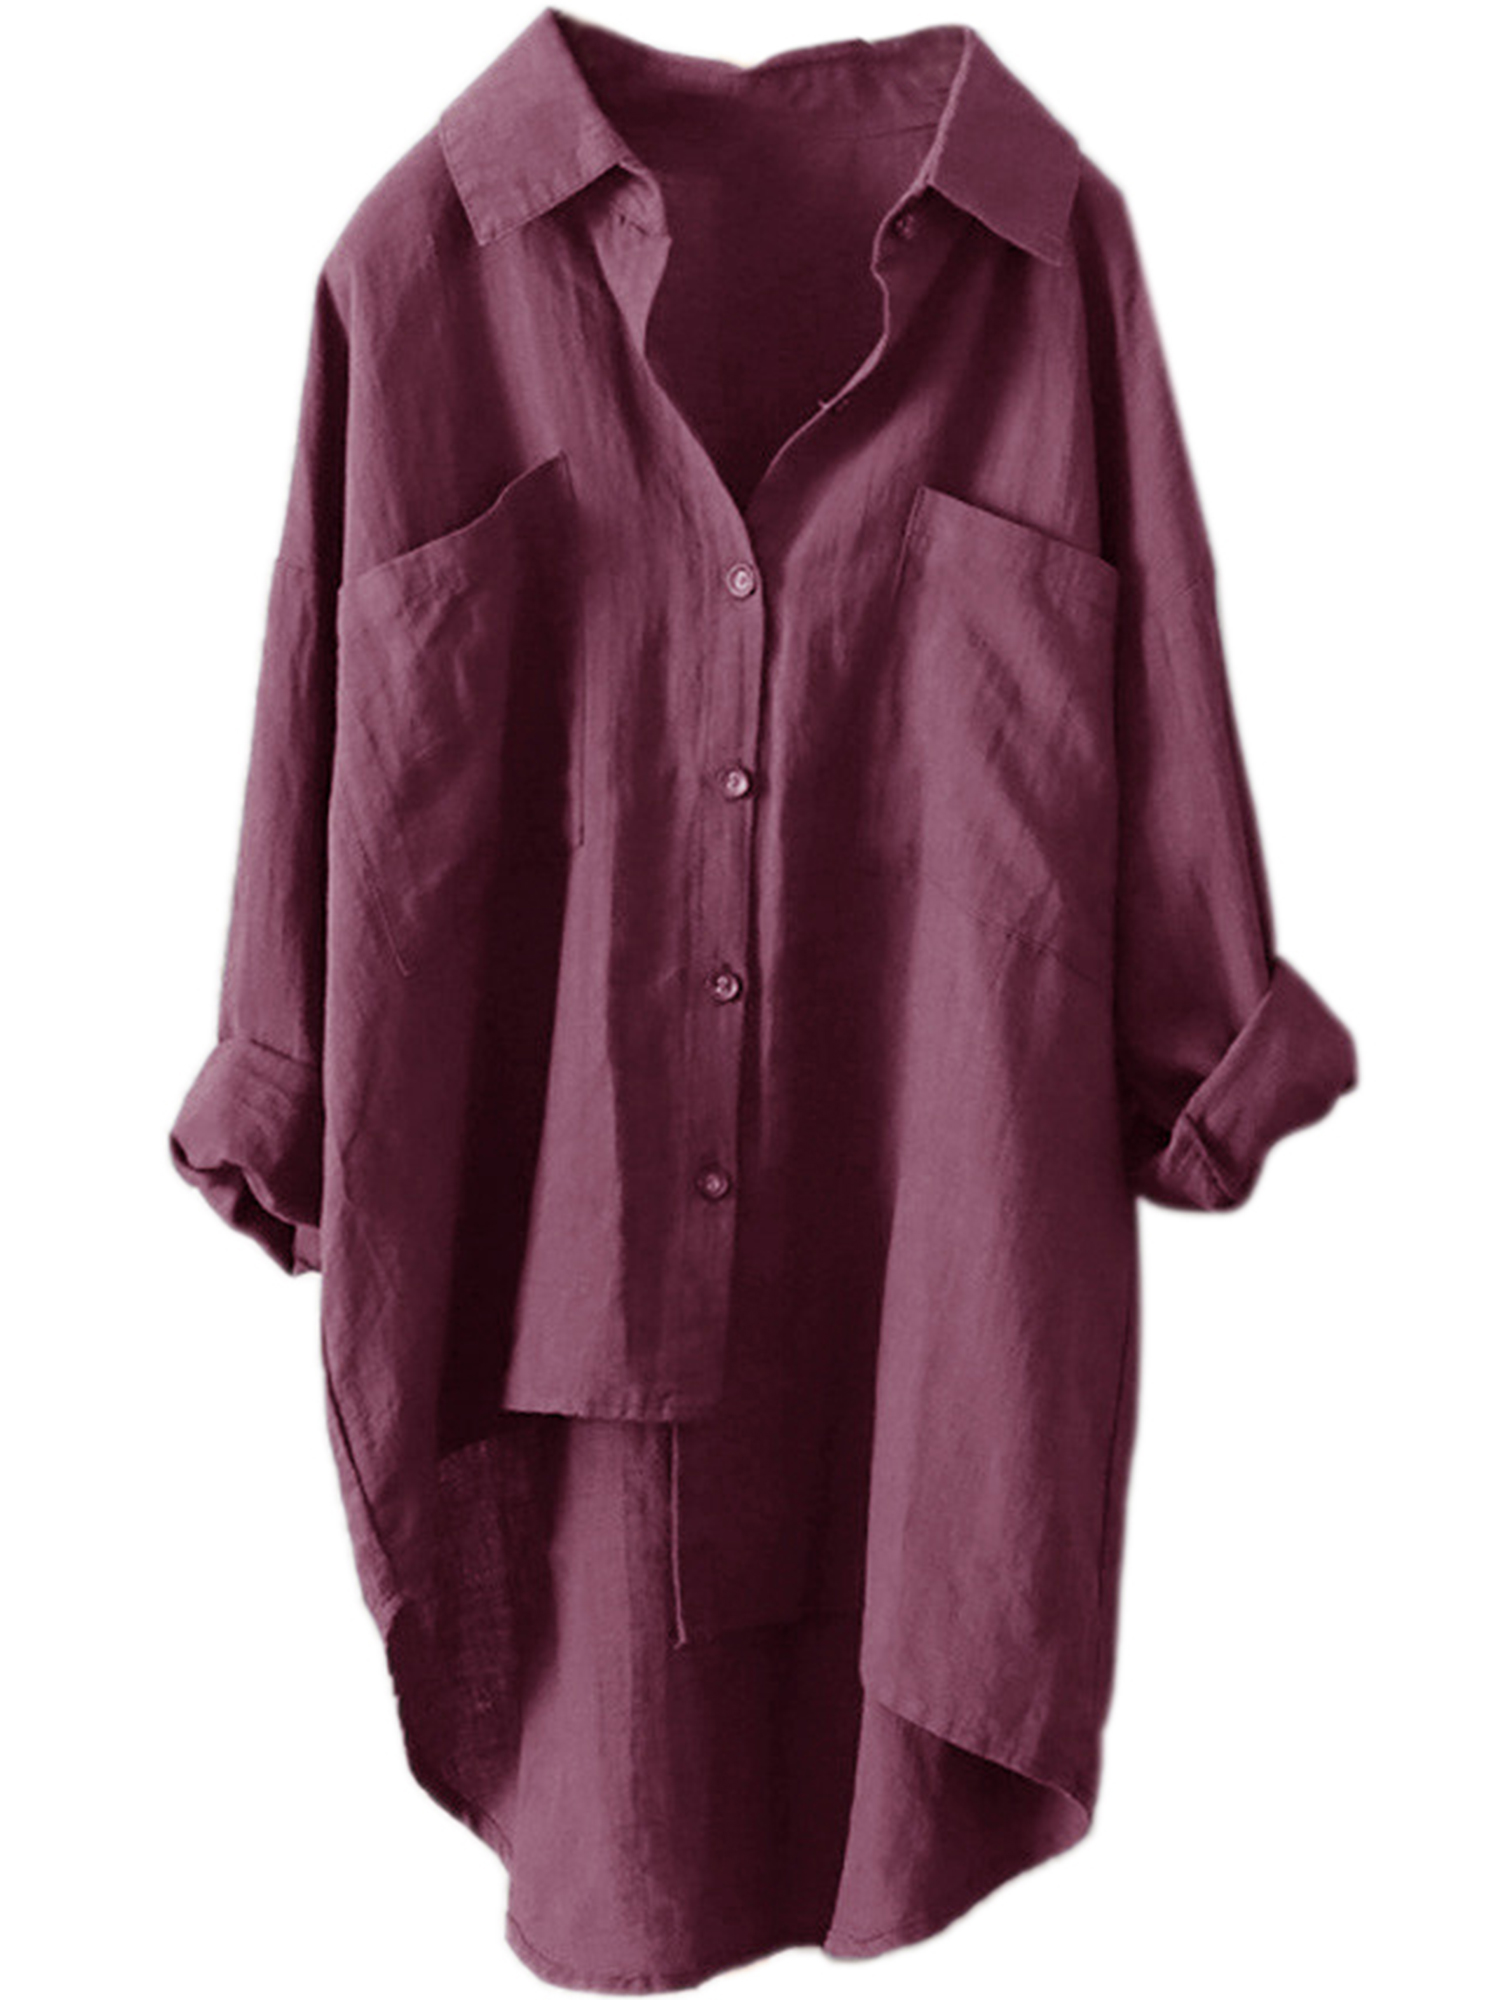 UKAP S-XXXXXL Women's Summer Autumn Long Sleeve pocket Mid-length Cotton Linen Blouse Ladies Loose Oversized Button Down Plus Size High Low T Shirt Long Sleeve Tops - image 1 of 2